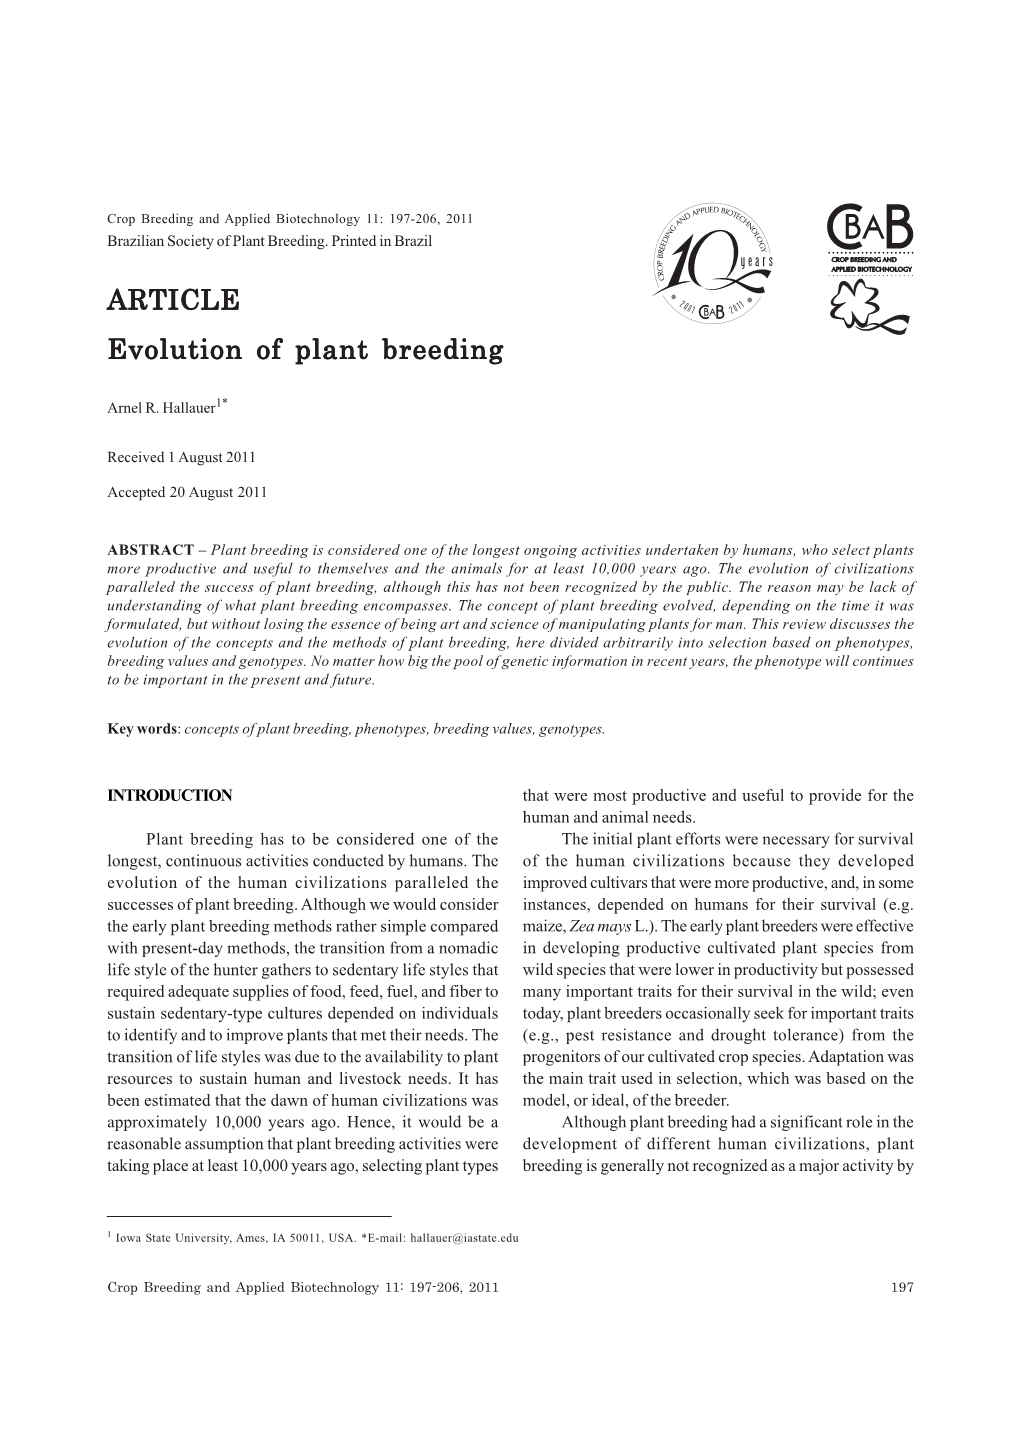 Evolution of Plant Breeding ARTICLE